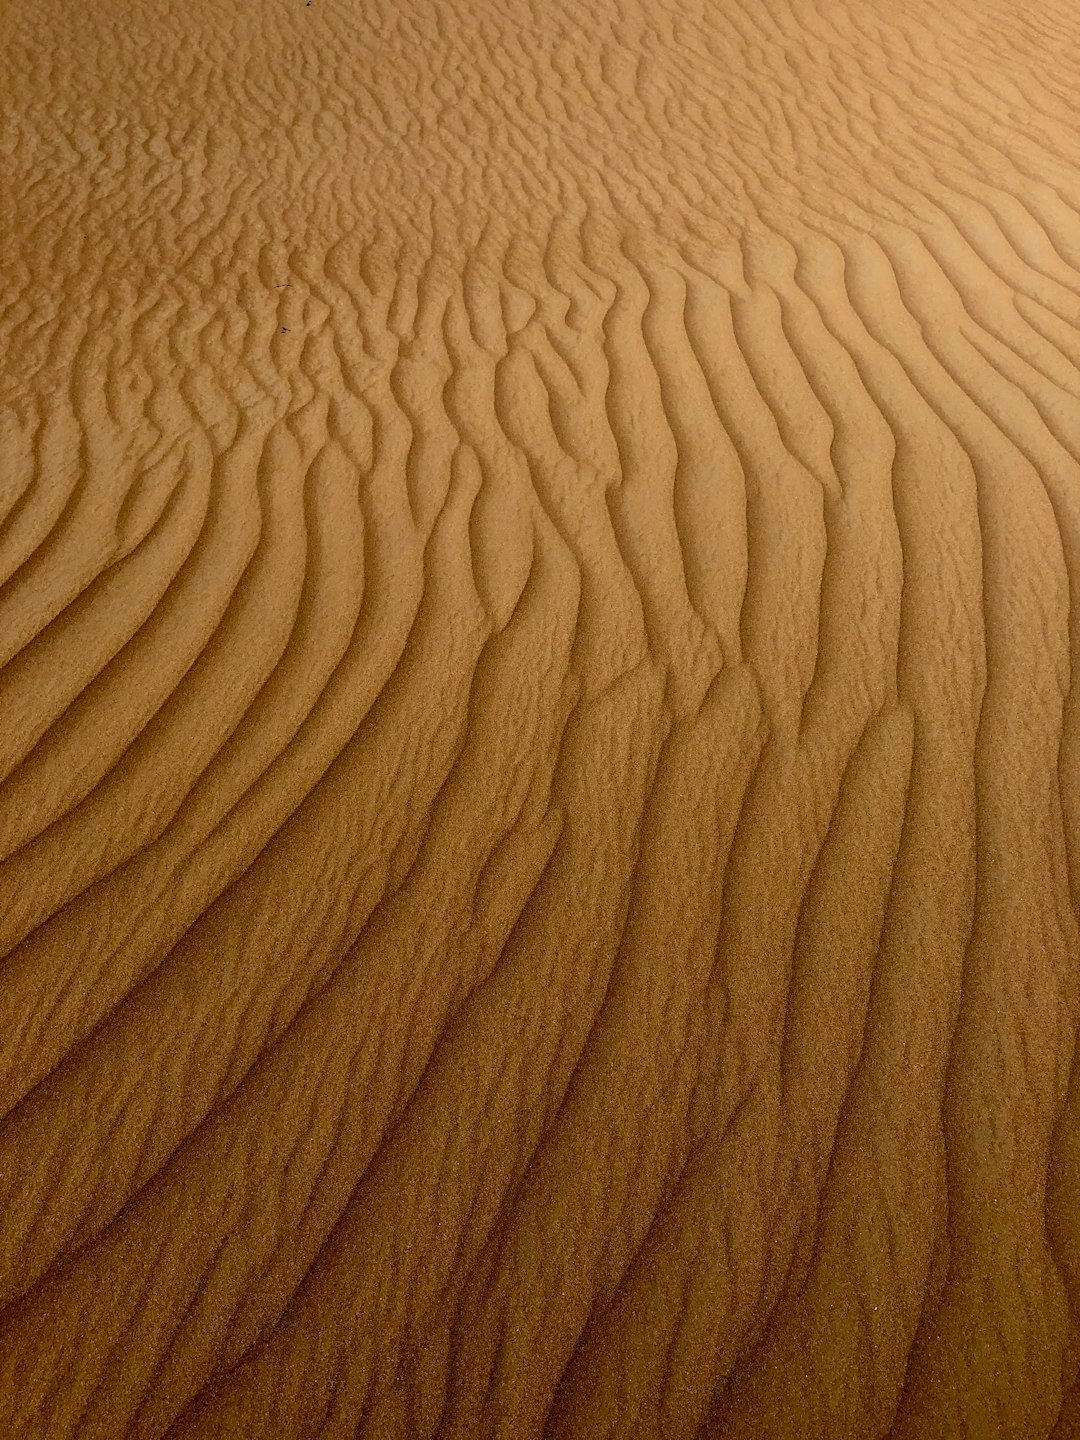 Desert photo spot Margham Al Madam